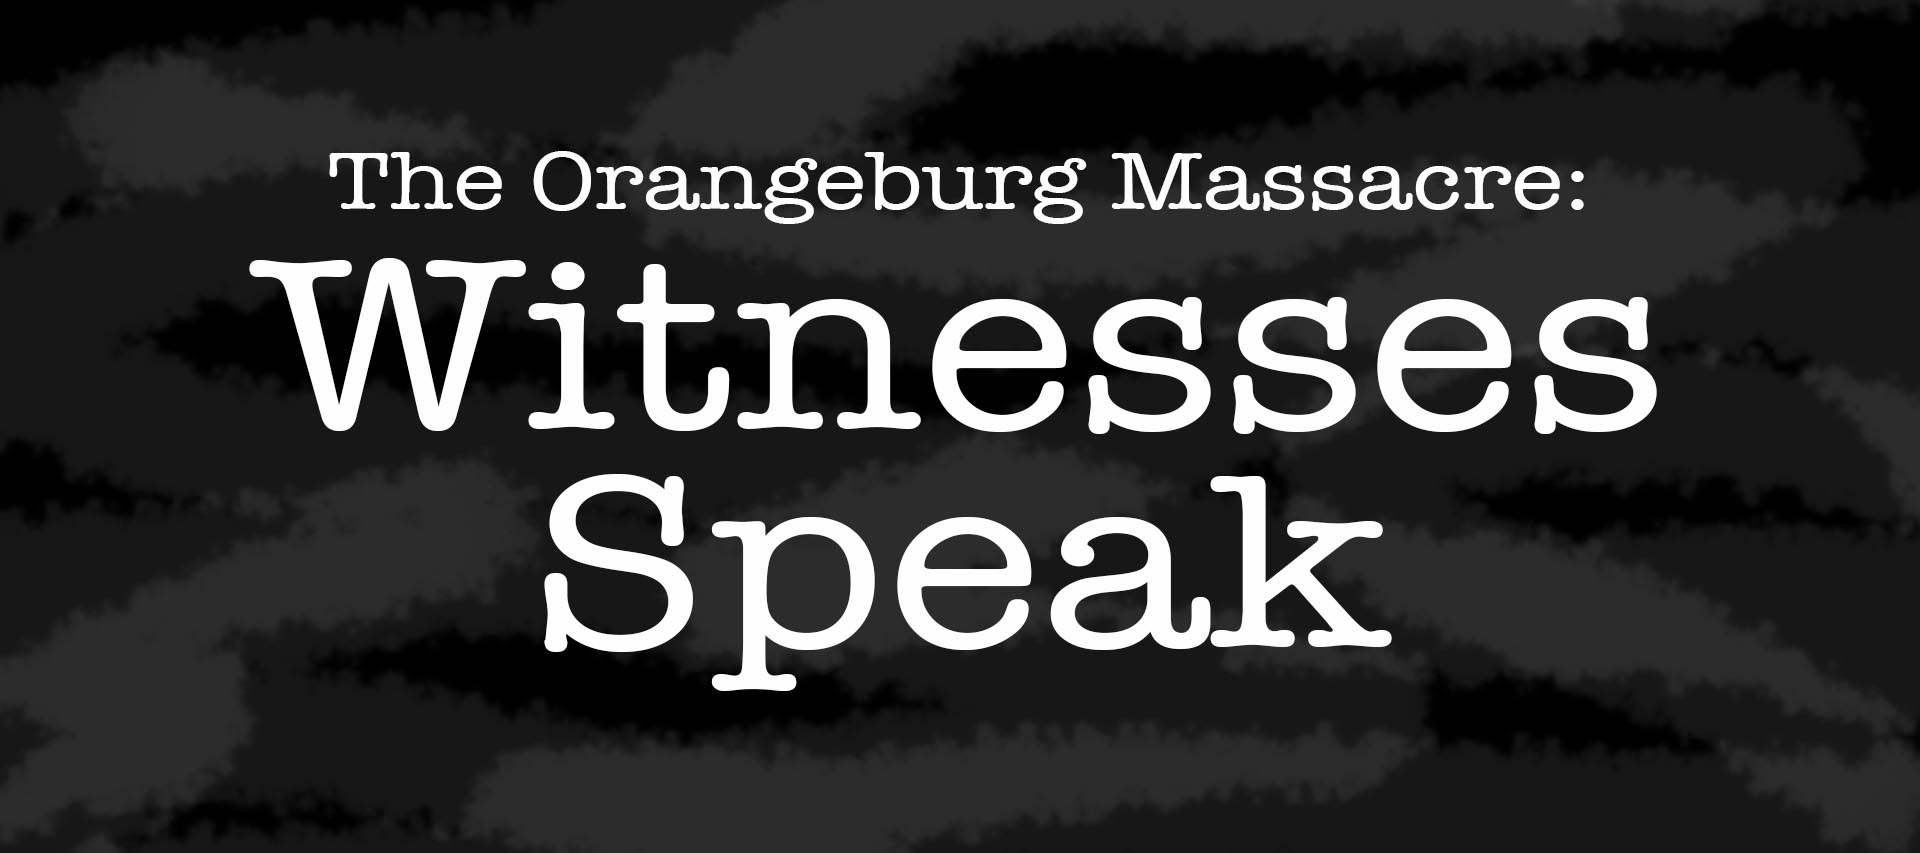 The Orangeburg Massacre: Witnesses Speak